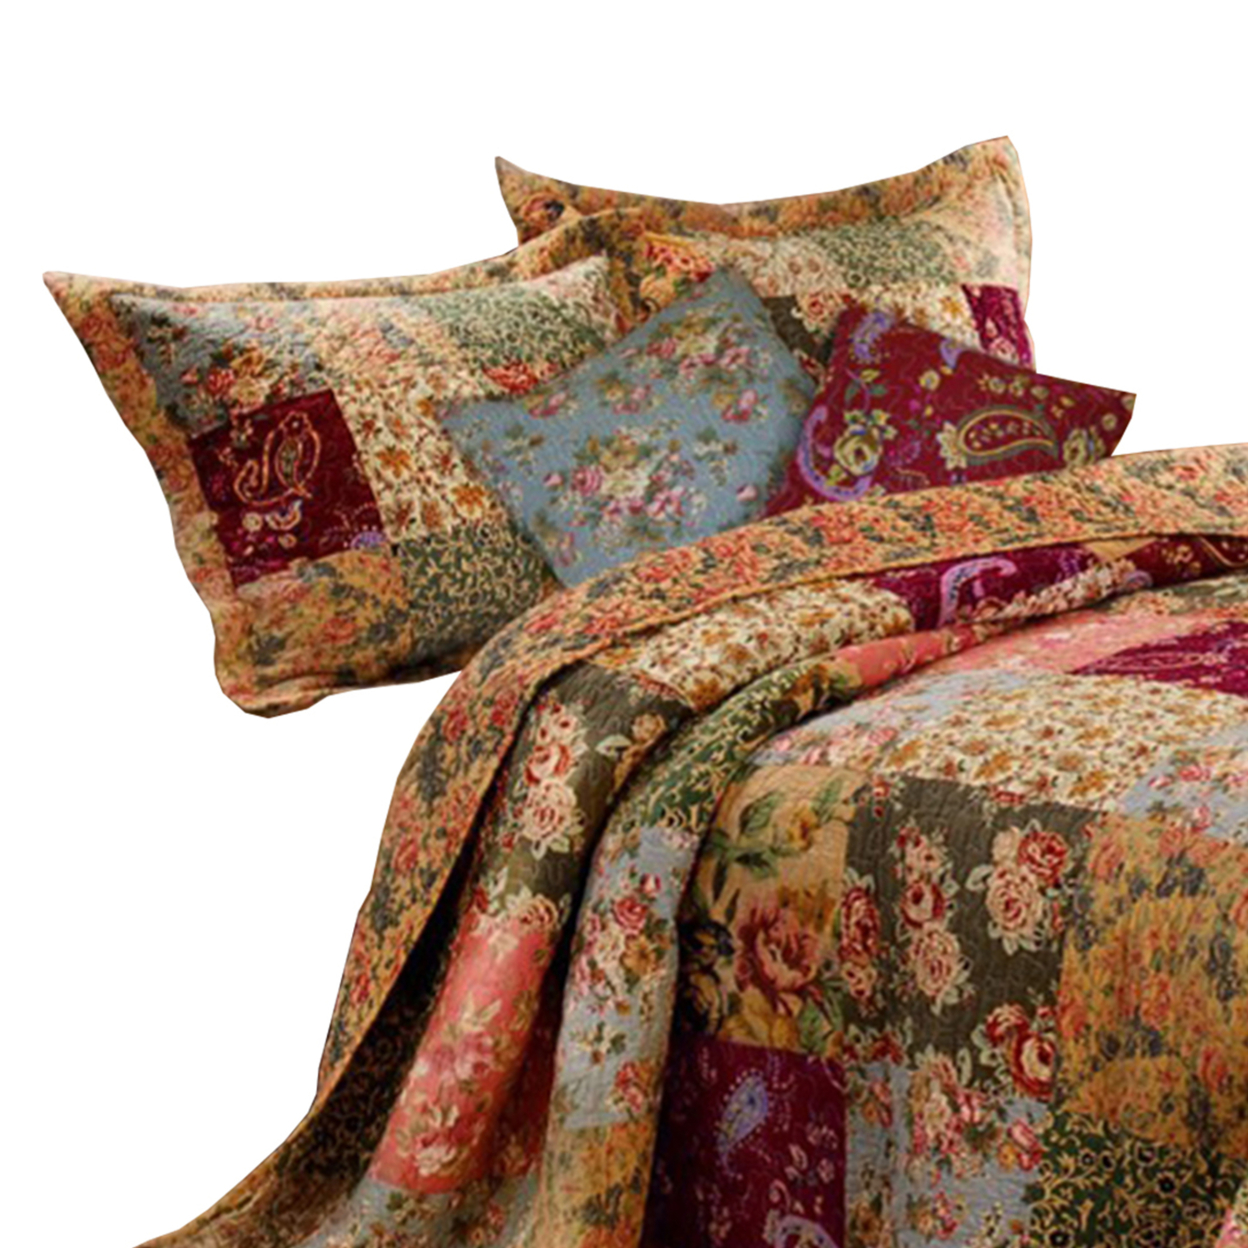 Kamet 5 Piece Fabric King Size Quilt Set With Floral Prints, Multicolor- Saltoro Sherpi